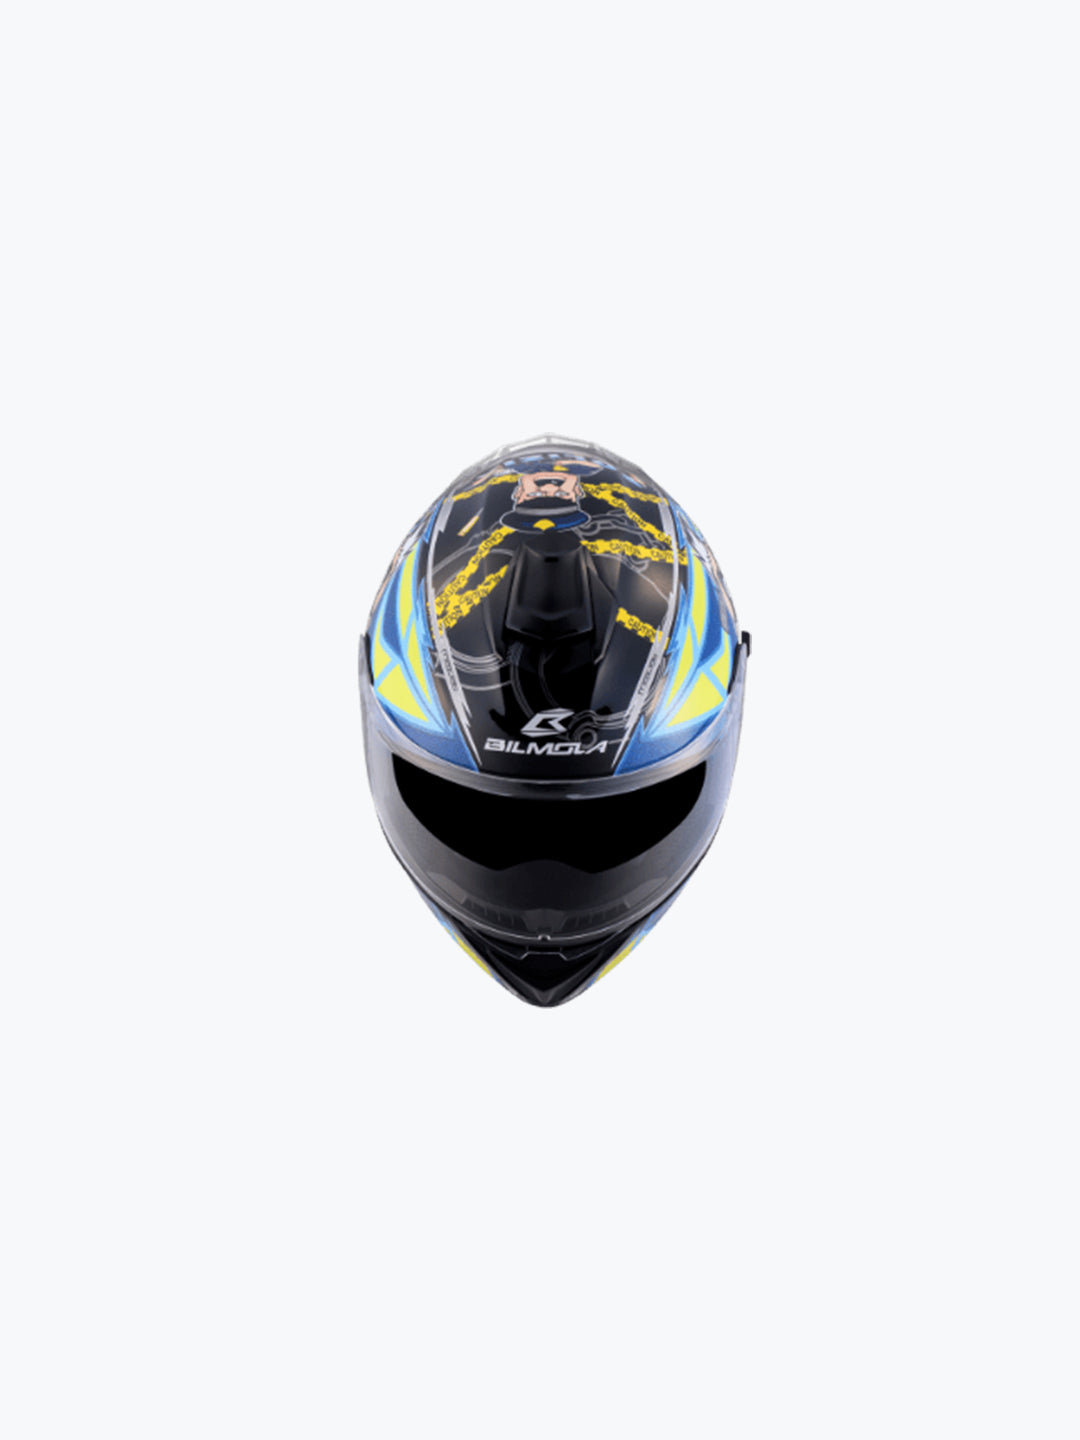 Bilmola Spare Liner set for Nex Rapid / Rapid S Helmets– Moto Central